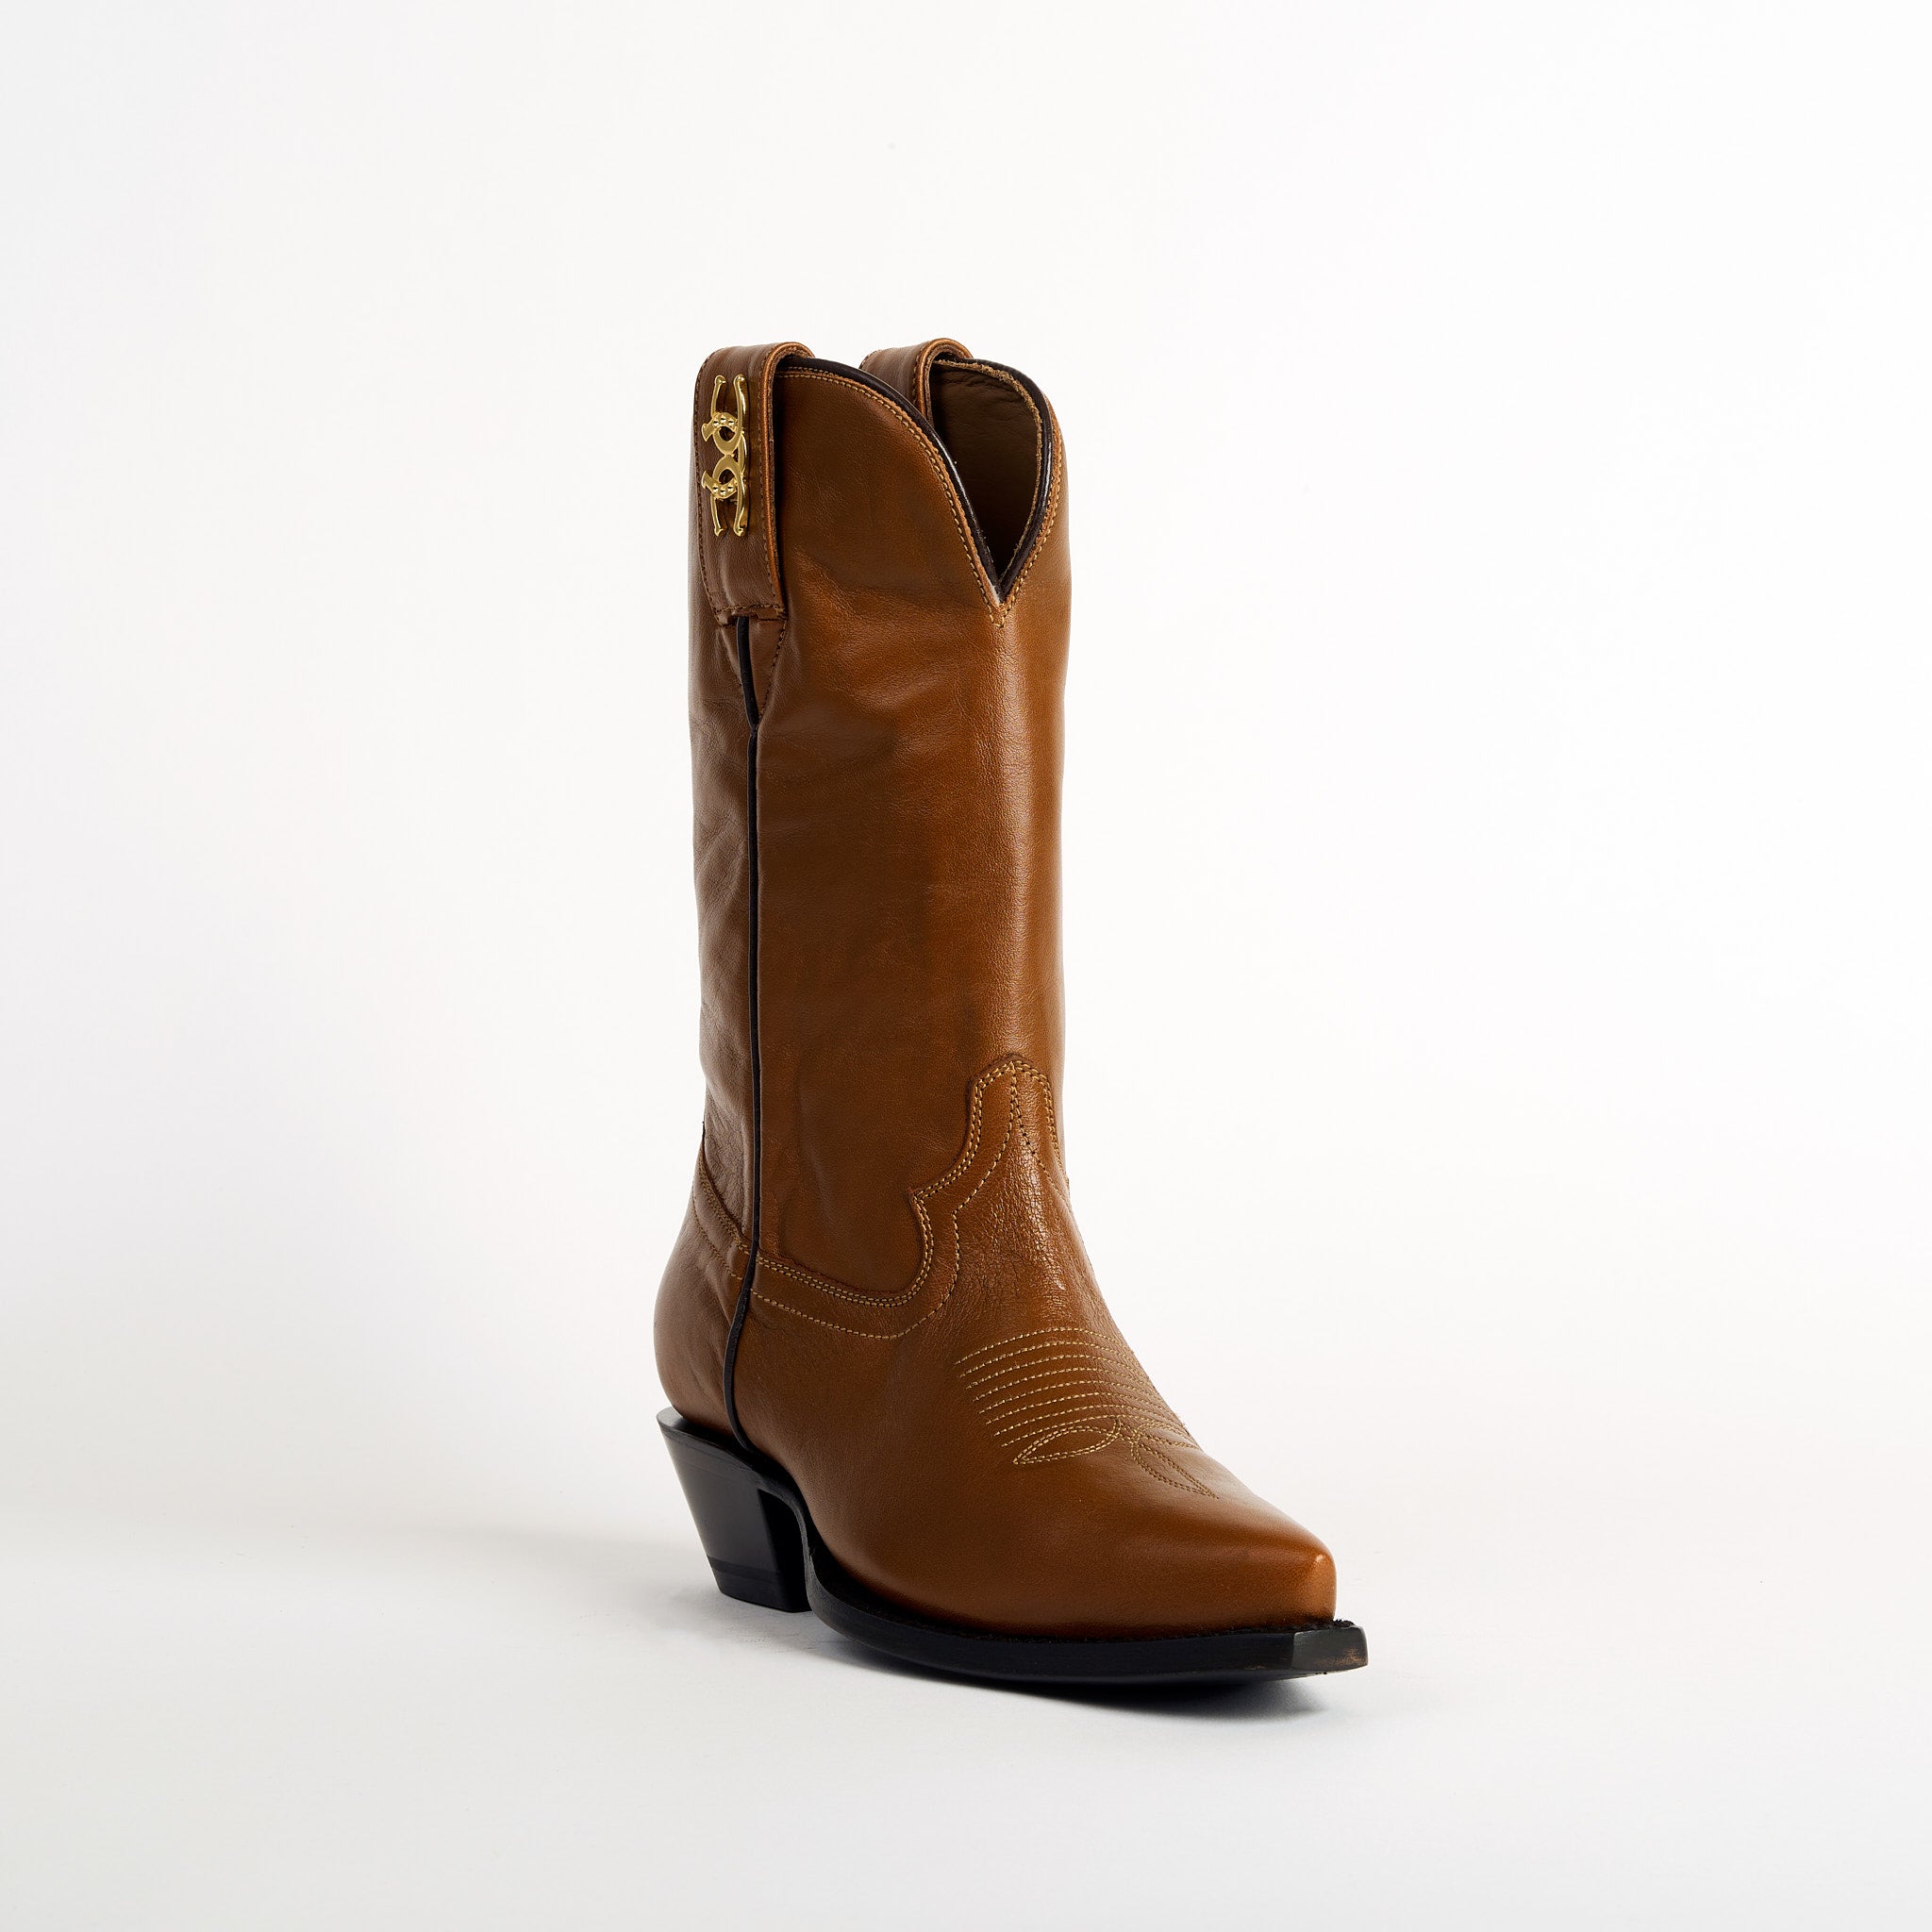 DALLAS - BROWN High Cowboy Boots